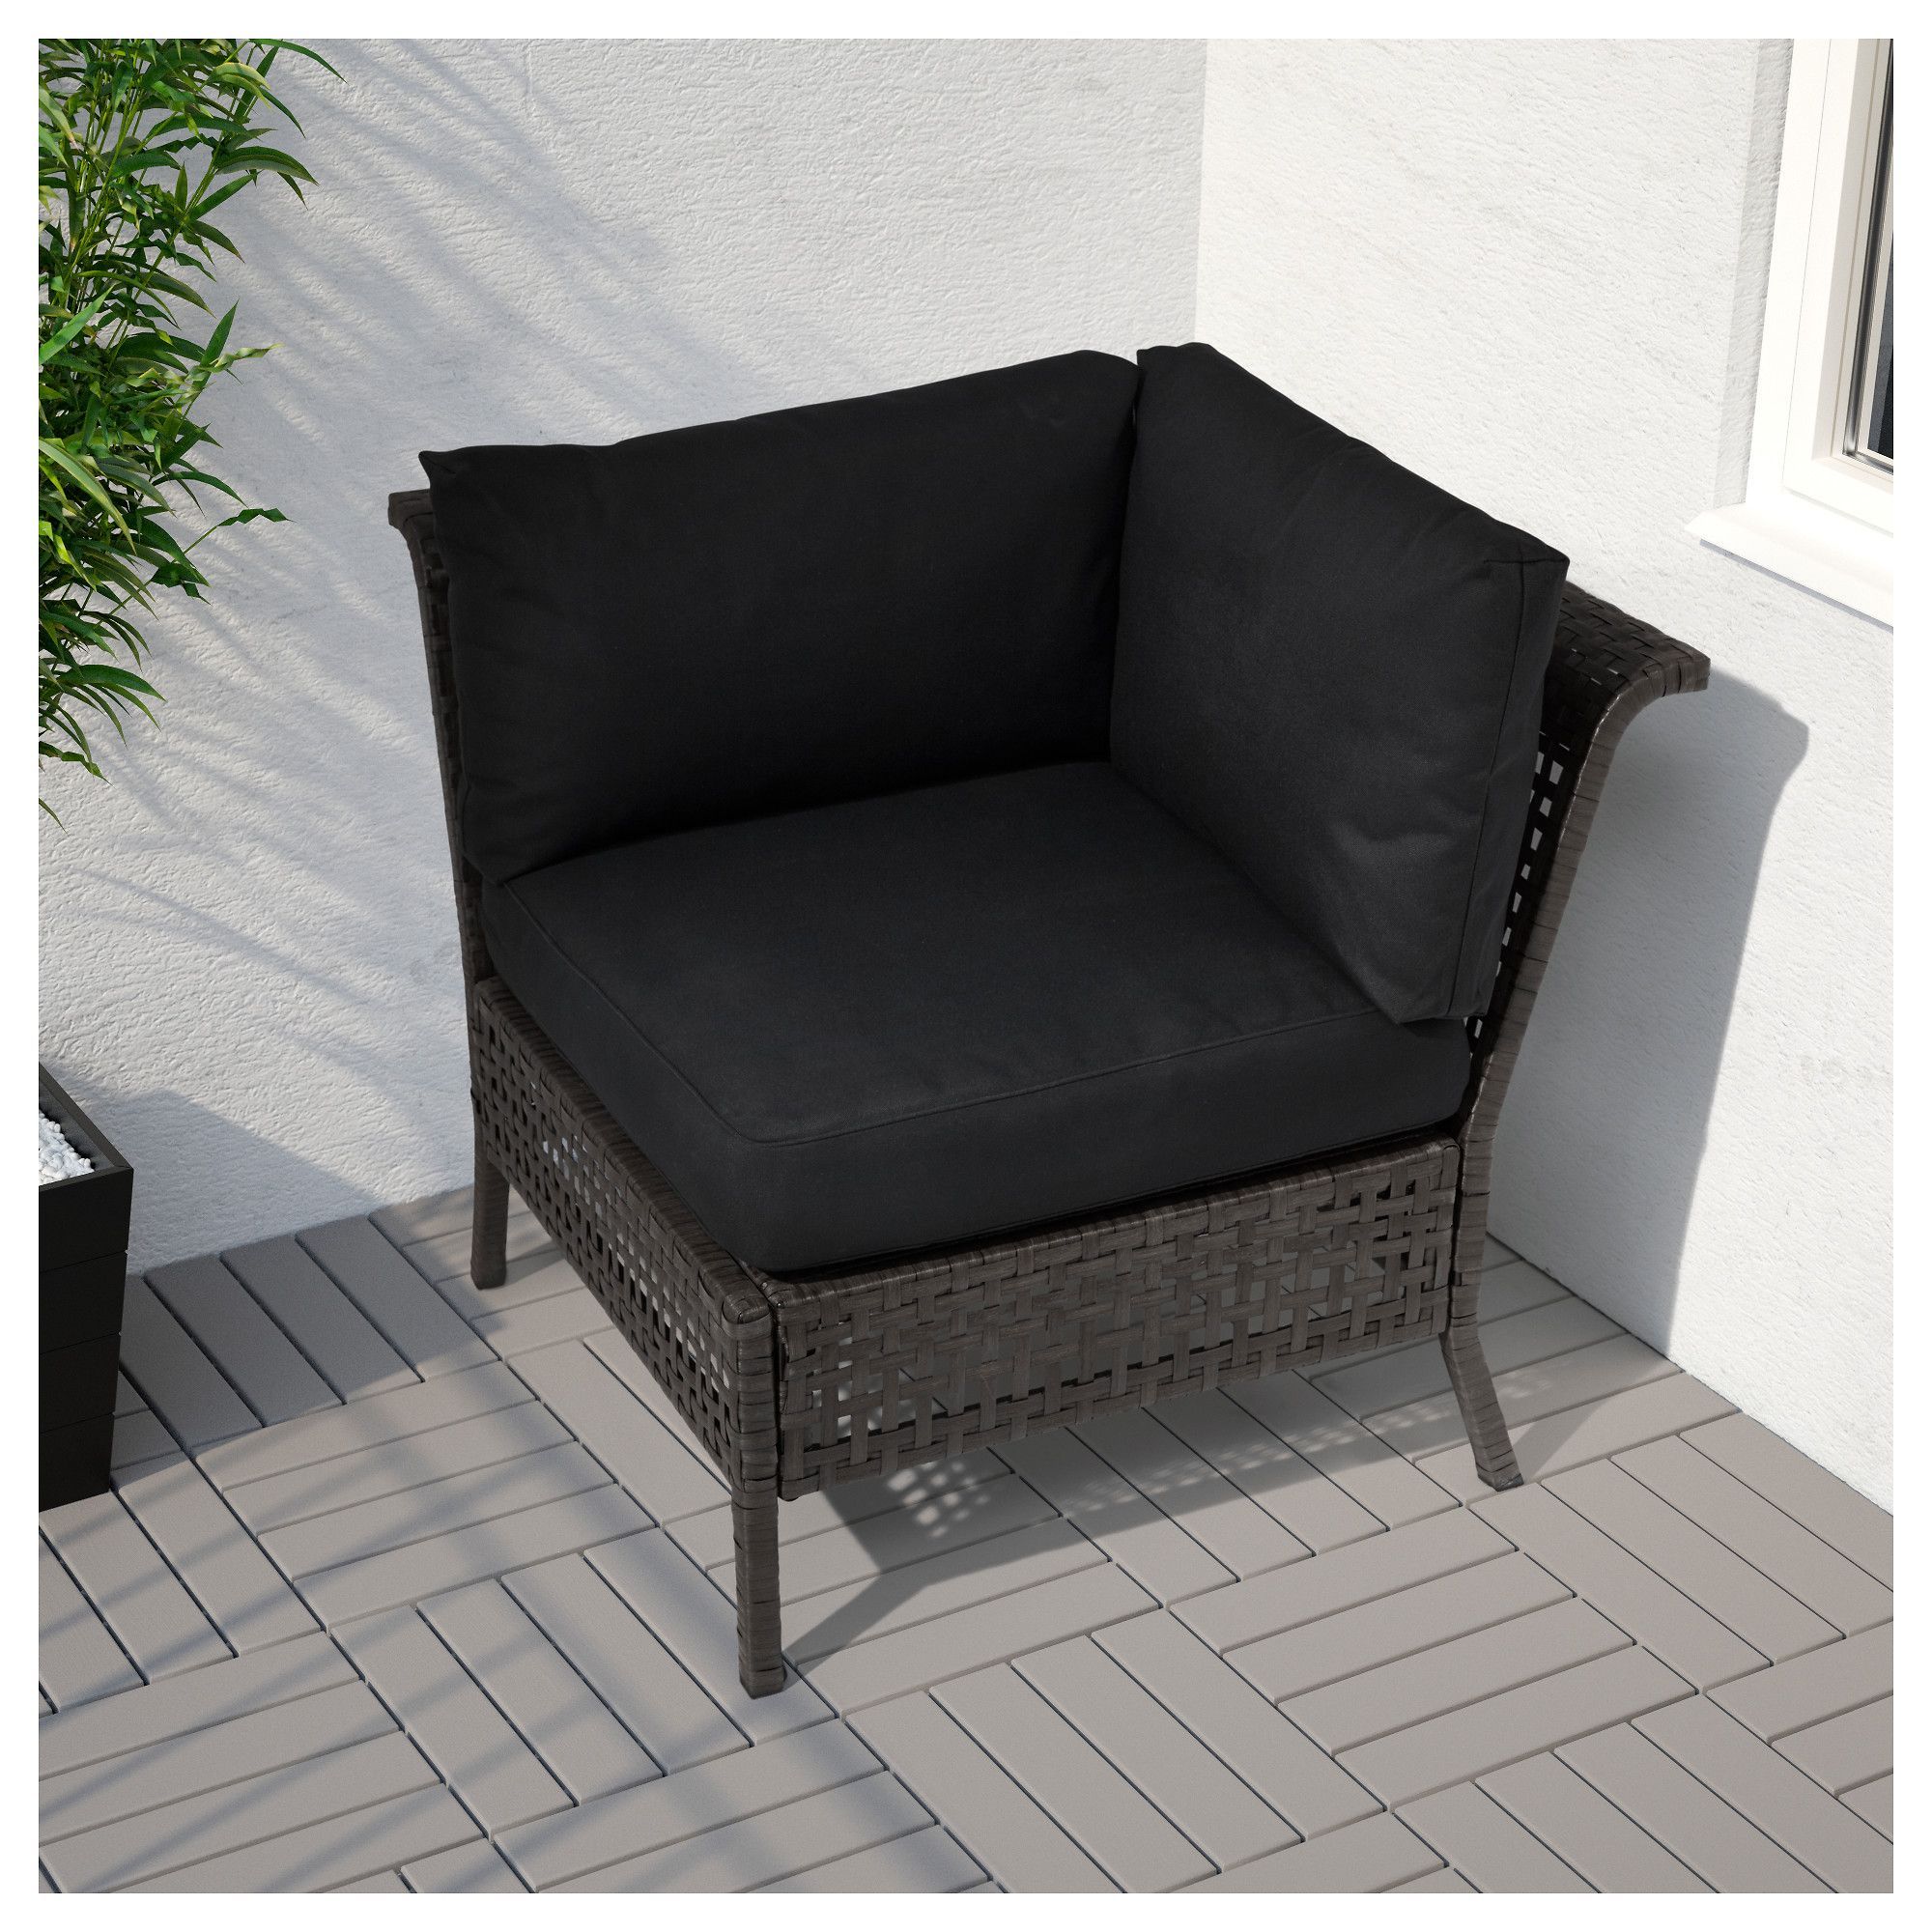 IKEA - KUNGSHOLMEN Corner section, outdoor black-brown -   24 outdoor garden spaces
 ideas